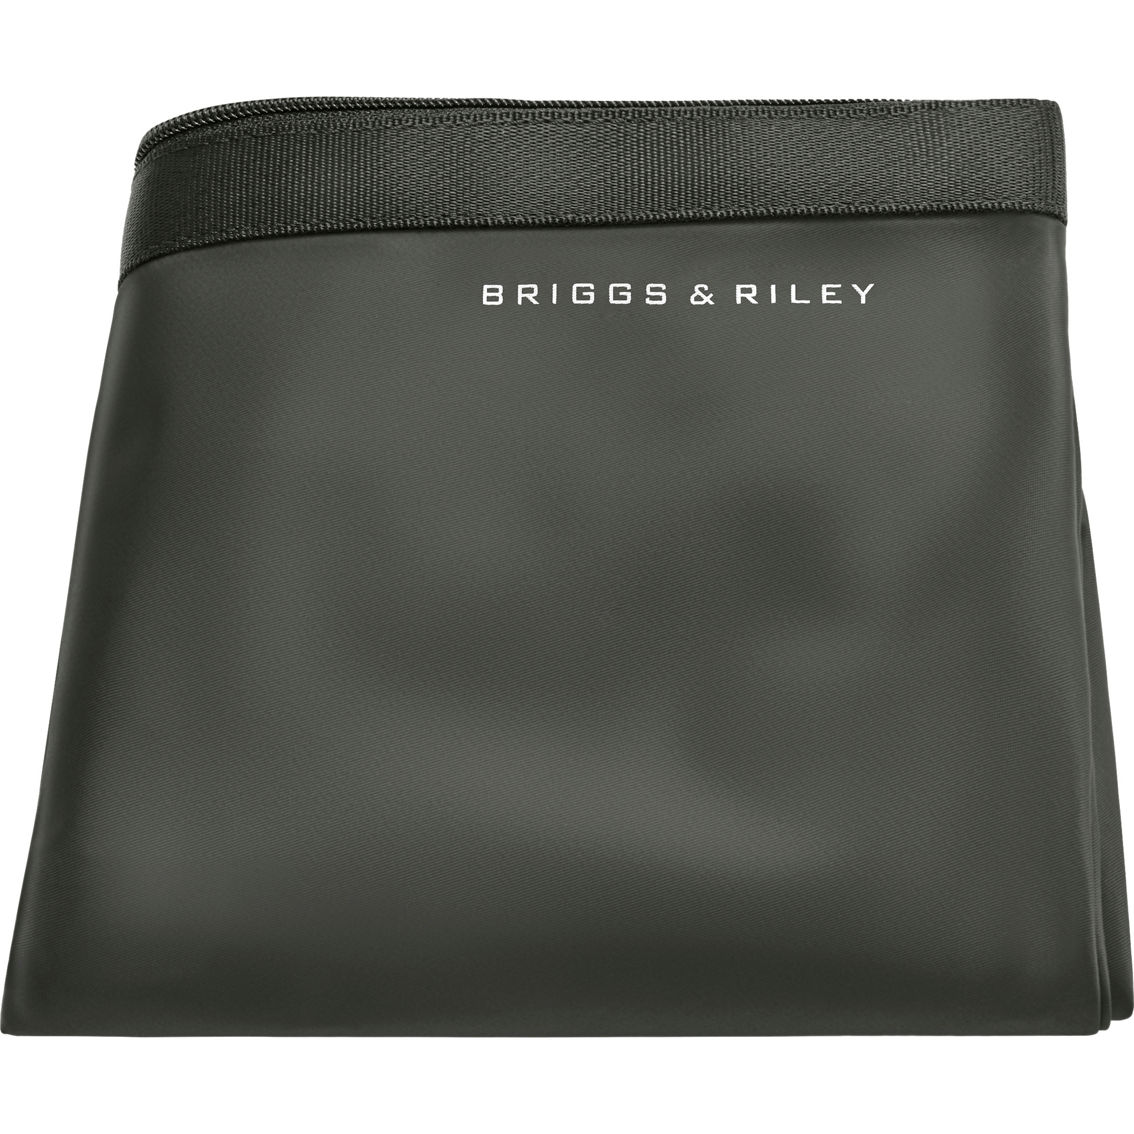 Briggs & Riley Travel Essentials Zippered Laundry Bag Black - Image 3 of 3